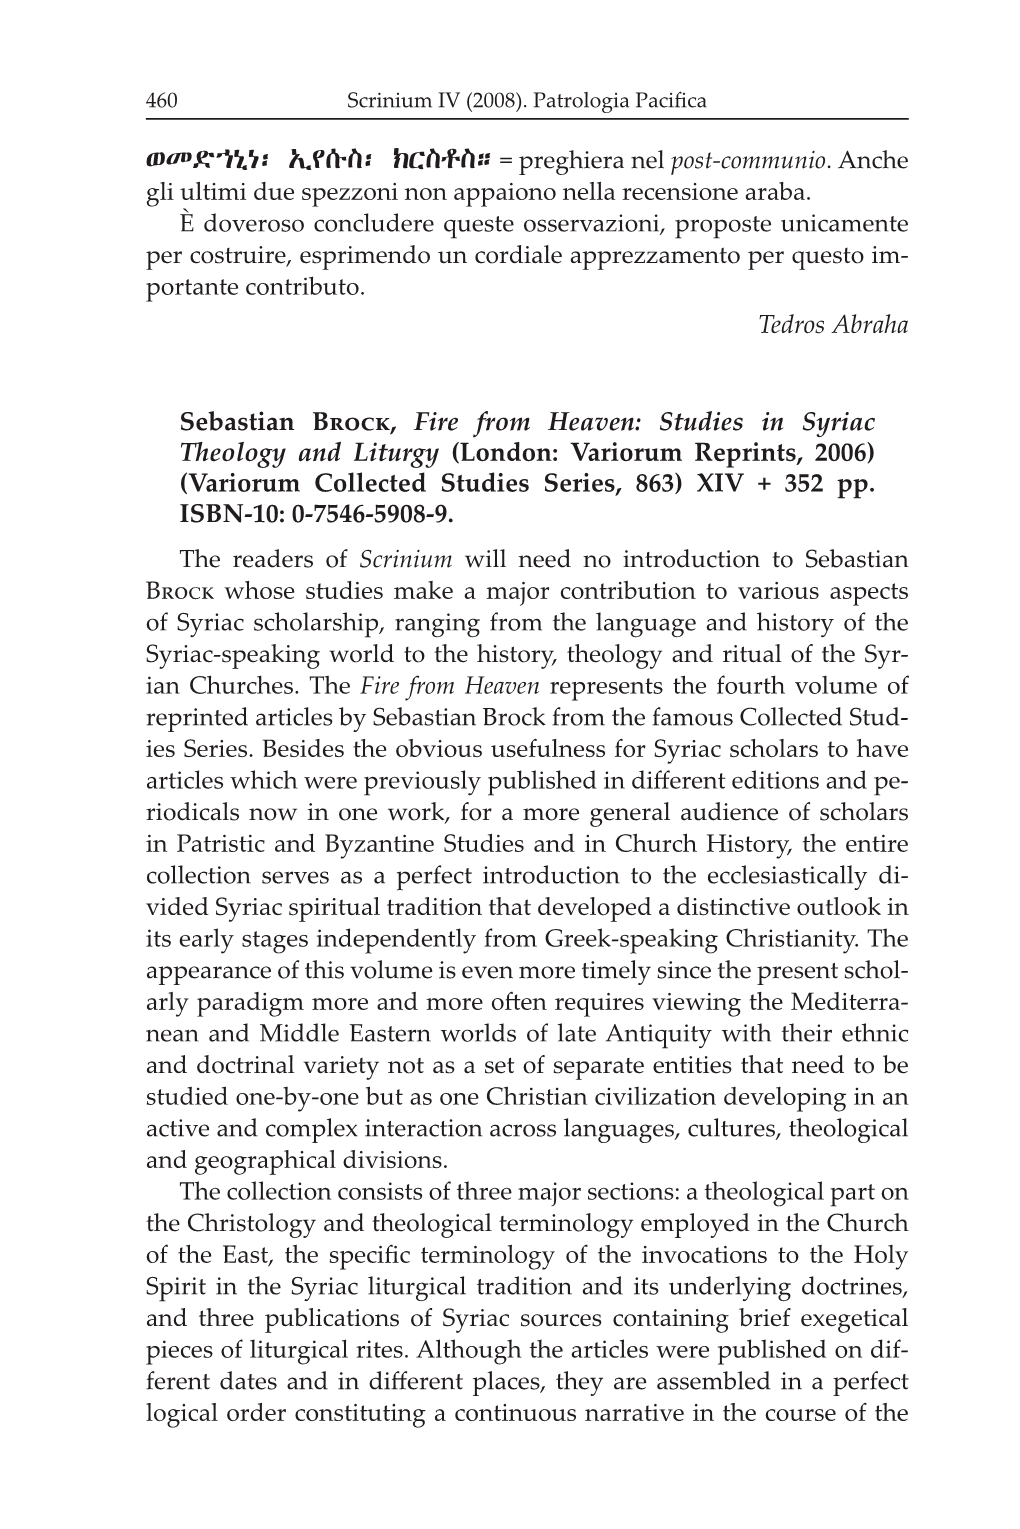 Studies in Syriac Theo Logy and Liturgy (London: Var’OržM Repr’Nts, 2006) (Var’OržM Col Lected StžD’Es Ser’Es, 863) XIV + 352 Pp